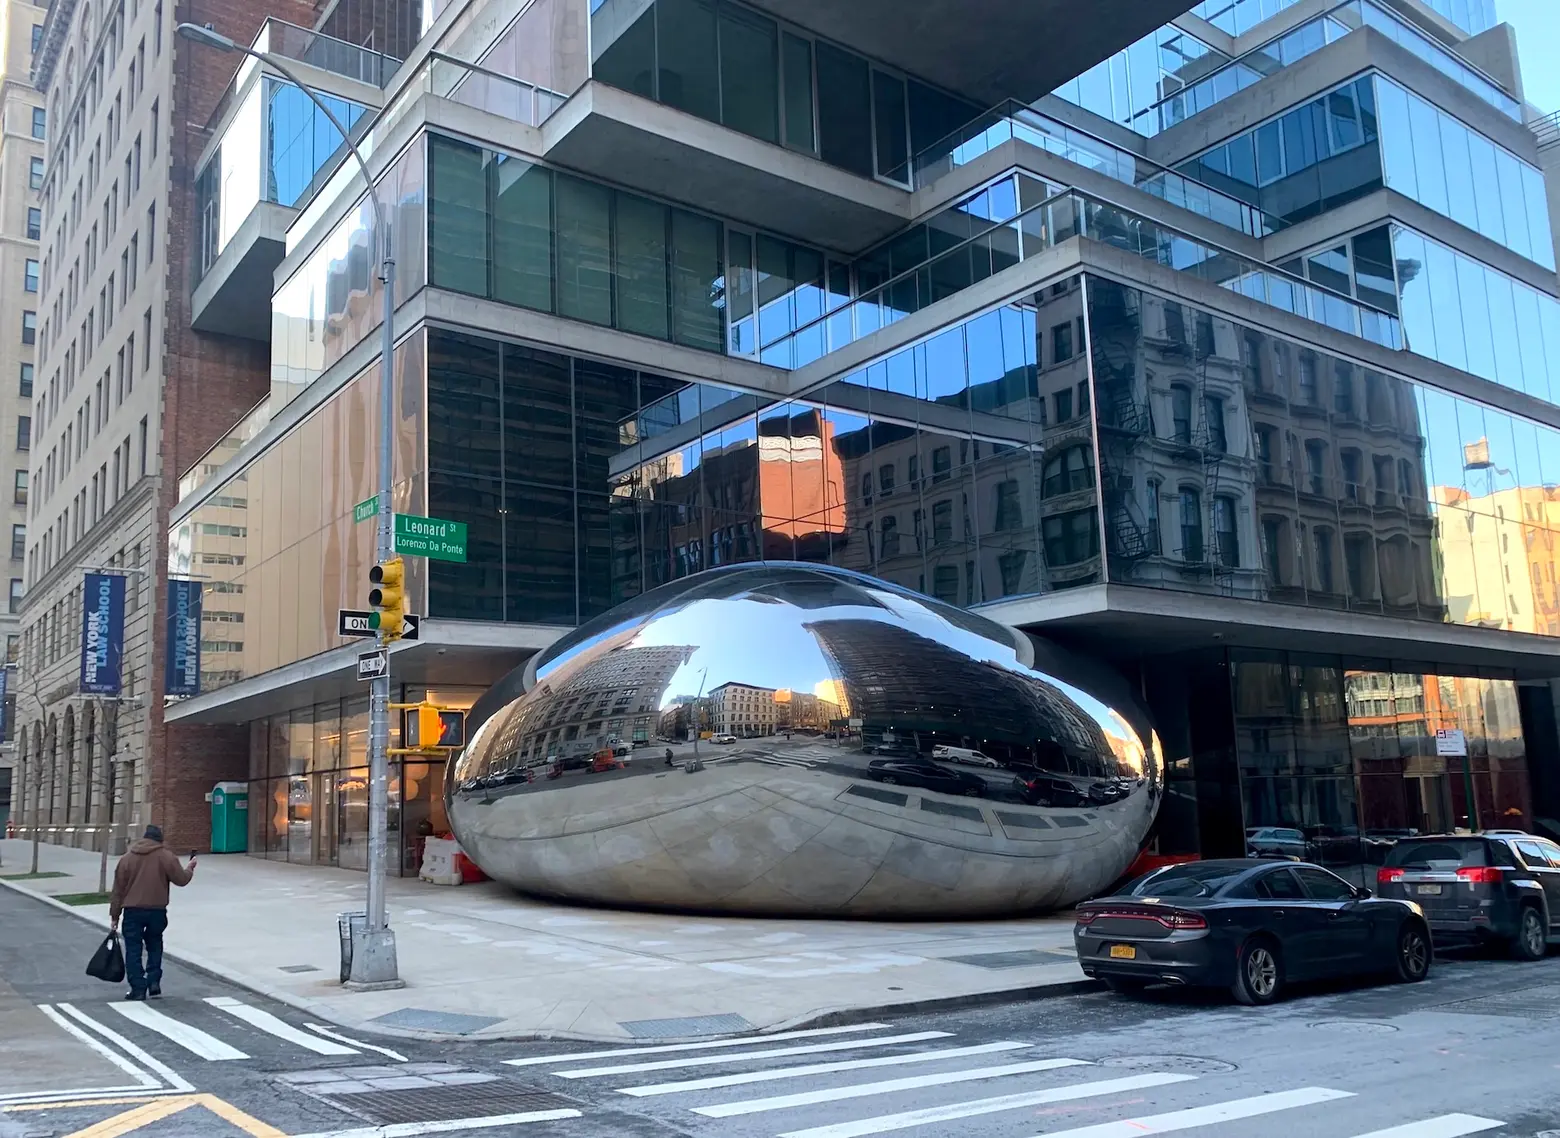 Anish Kapoor’s bean sculpture is finally complete in Tribeca